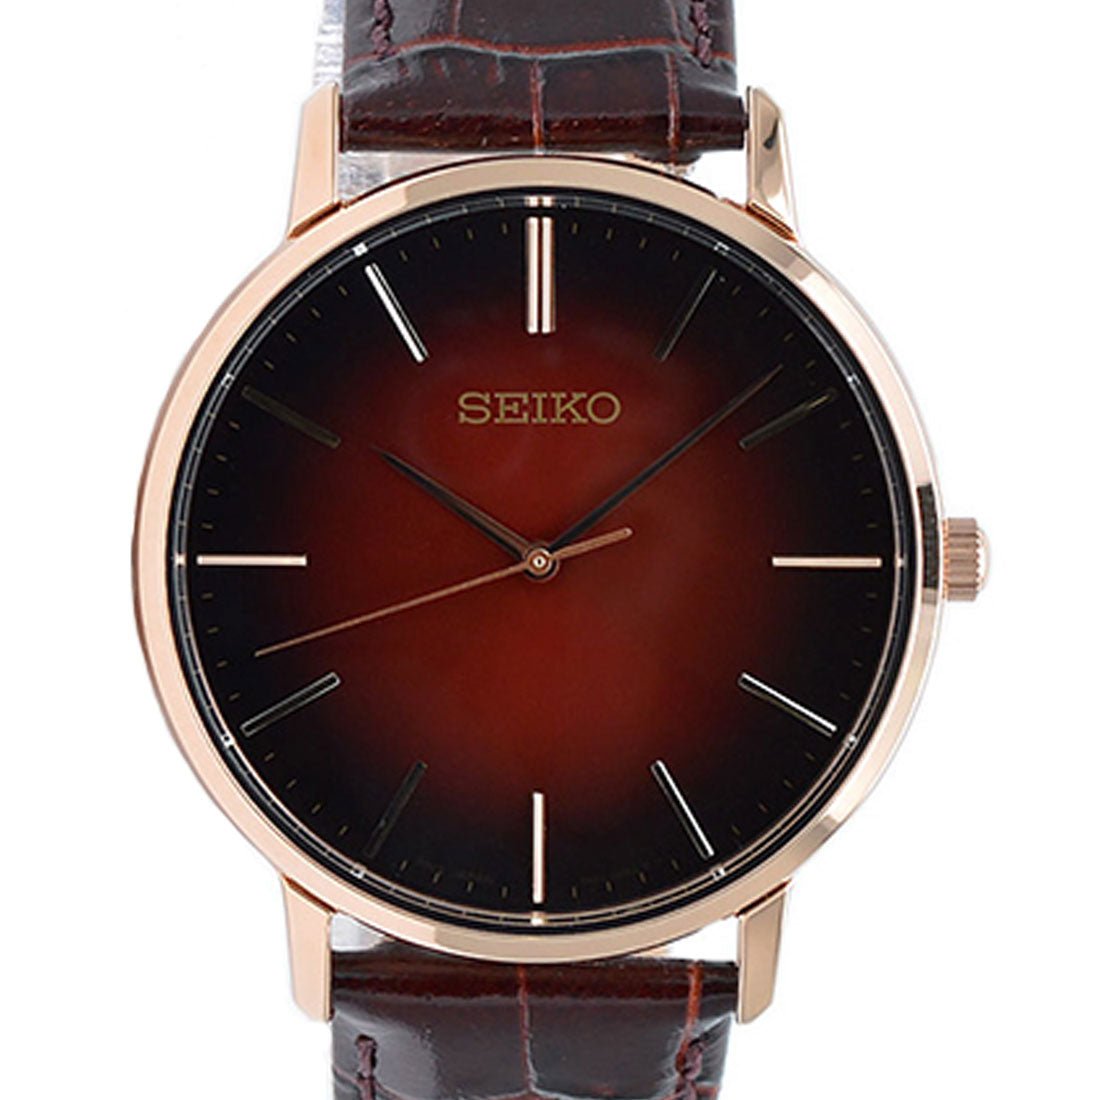 Seiko Selection Leather JDM Watch SCXP130 -Seiko